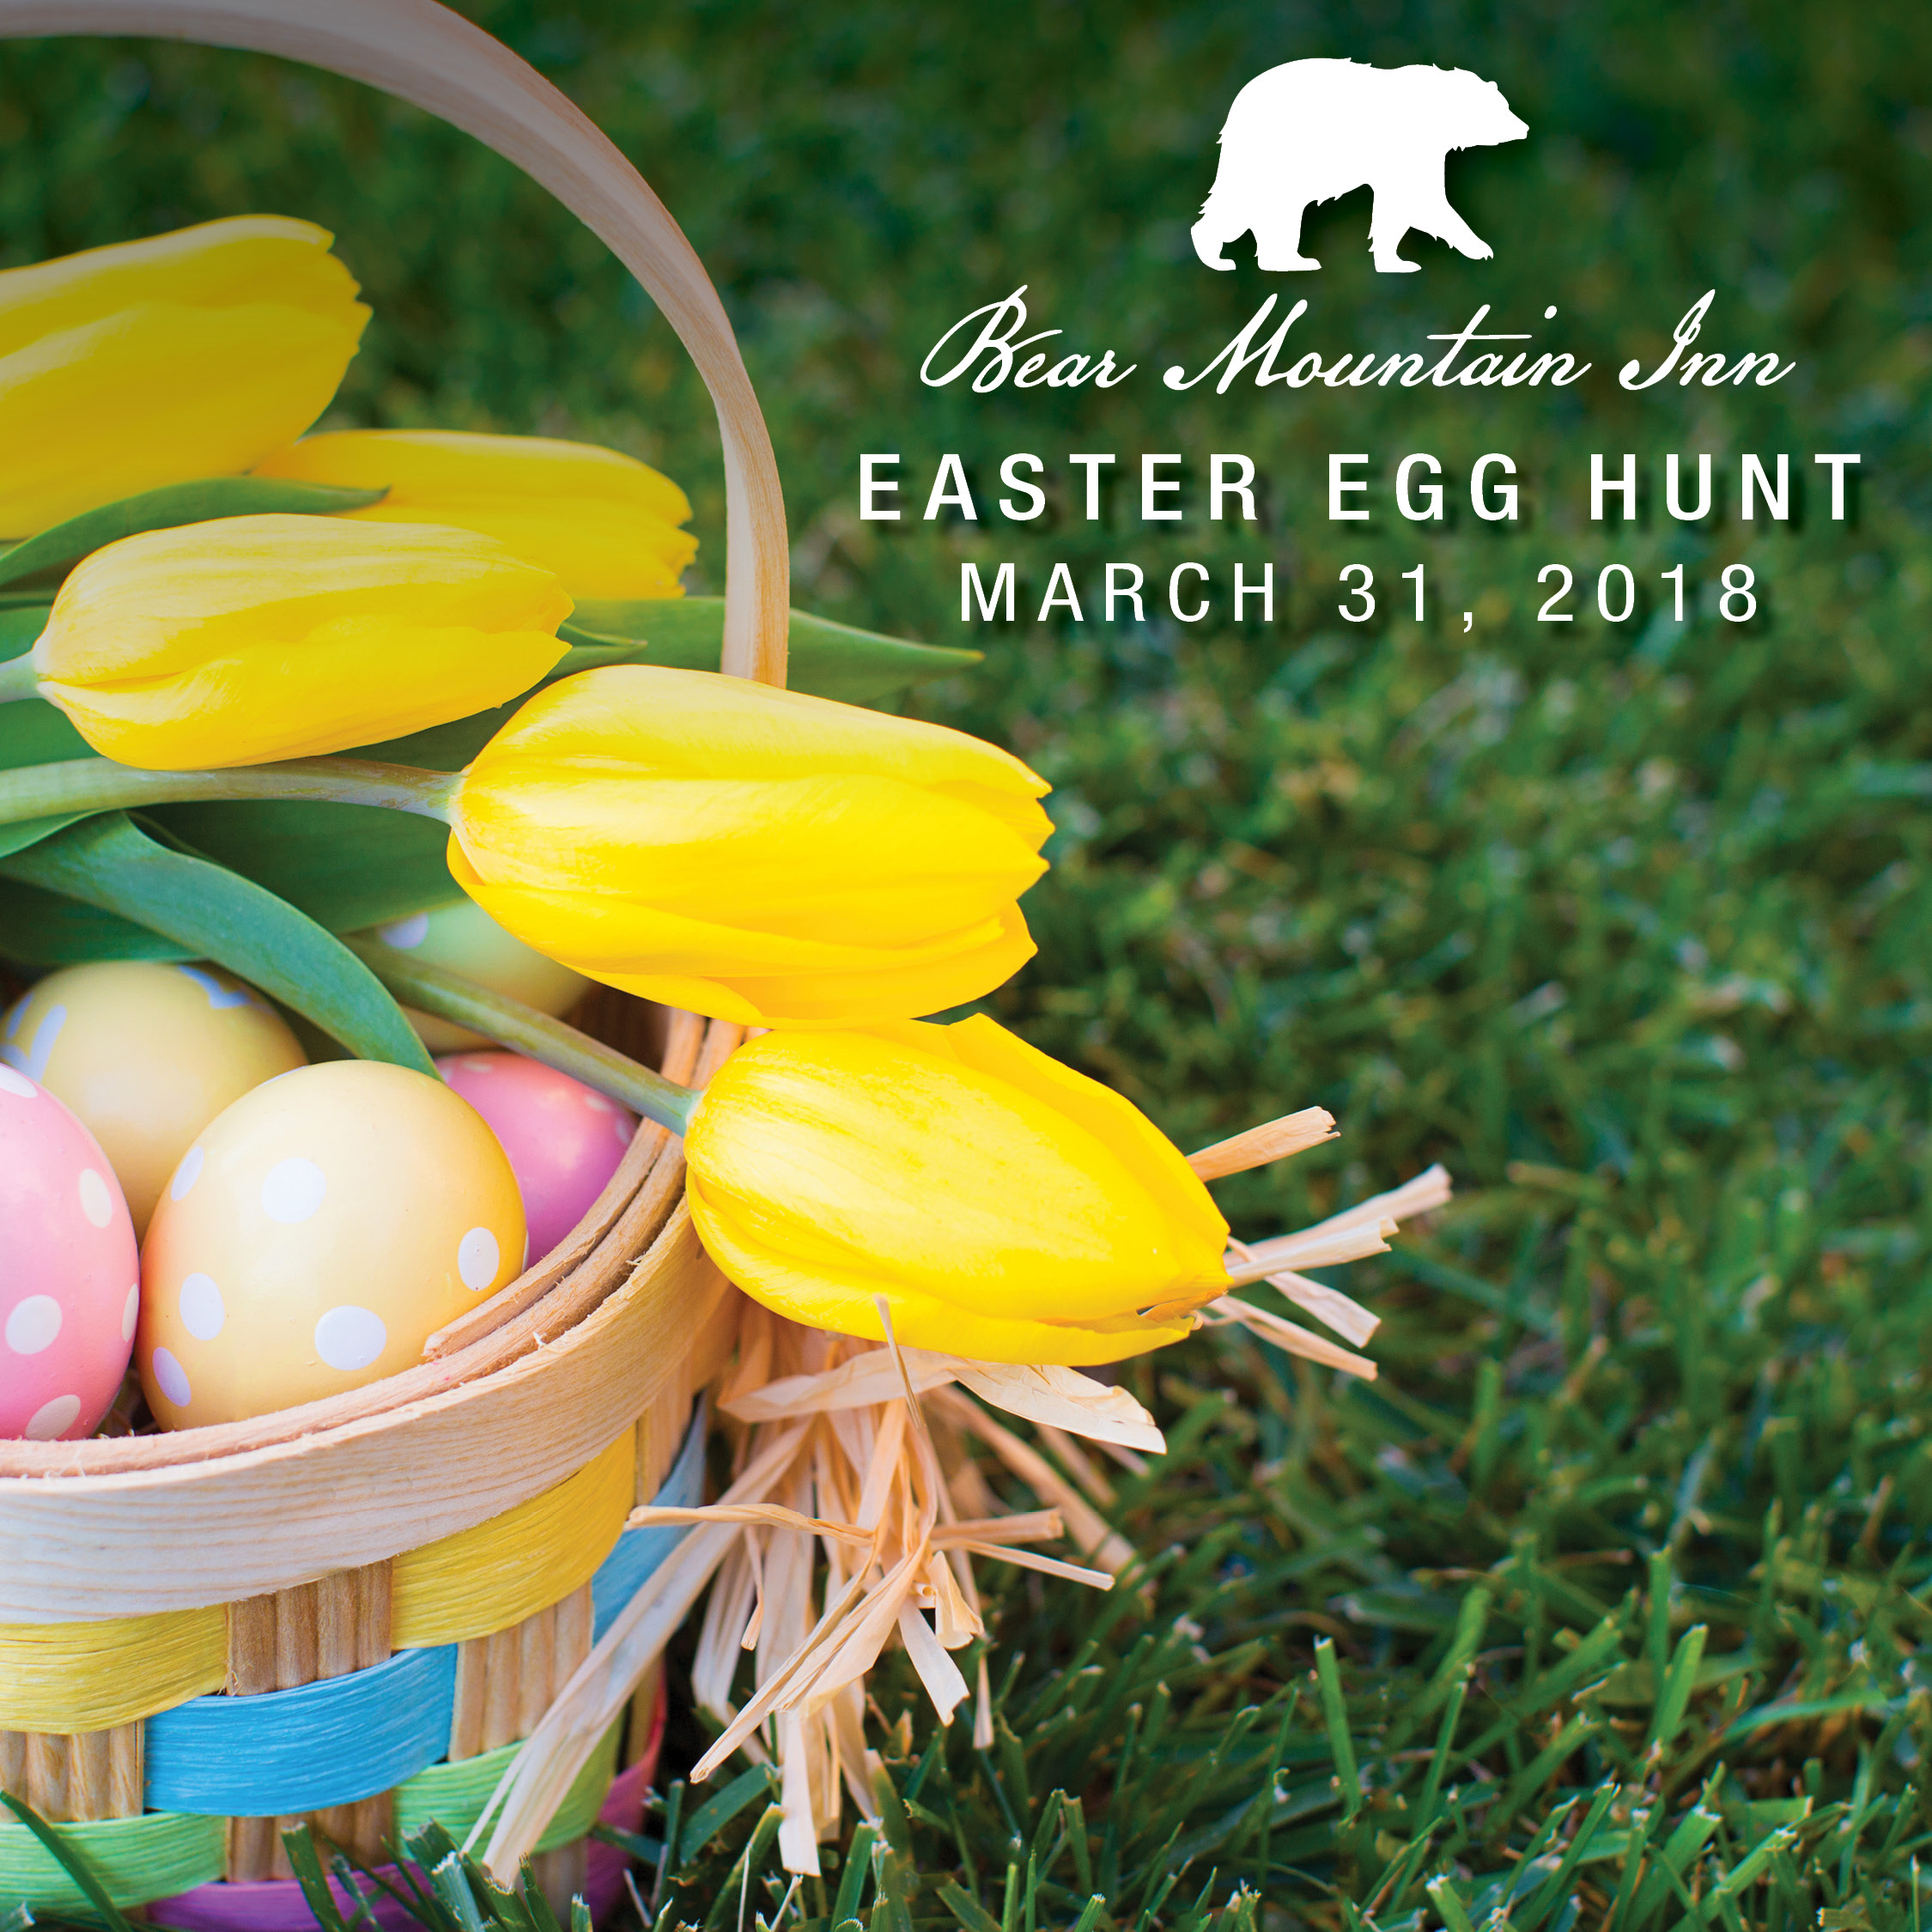 Easter egg hunt advertisement